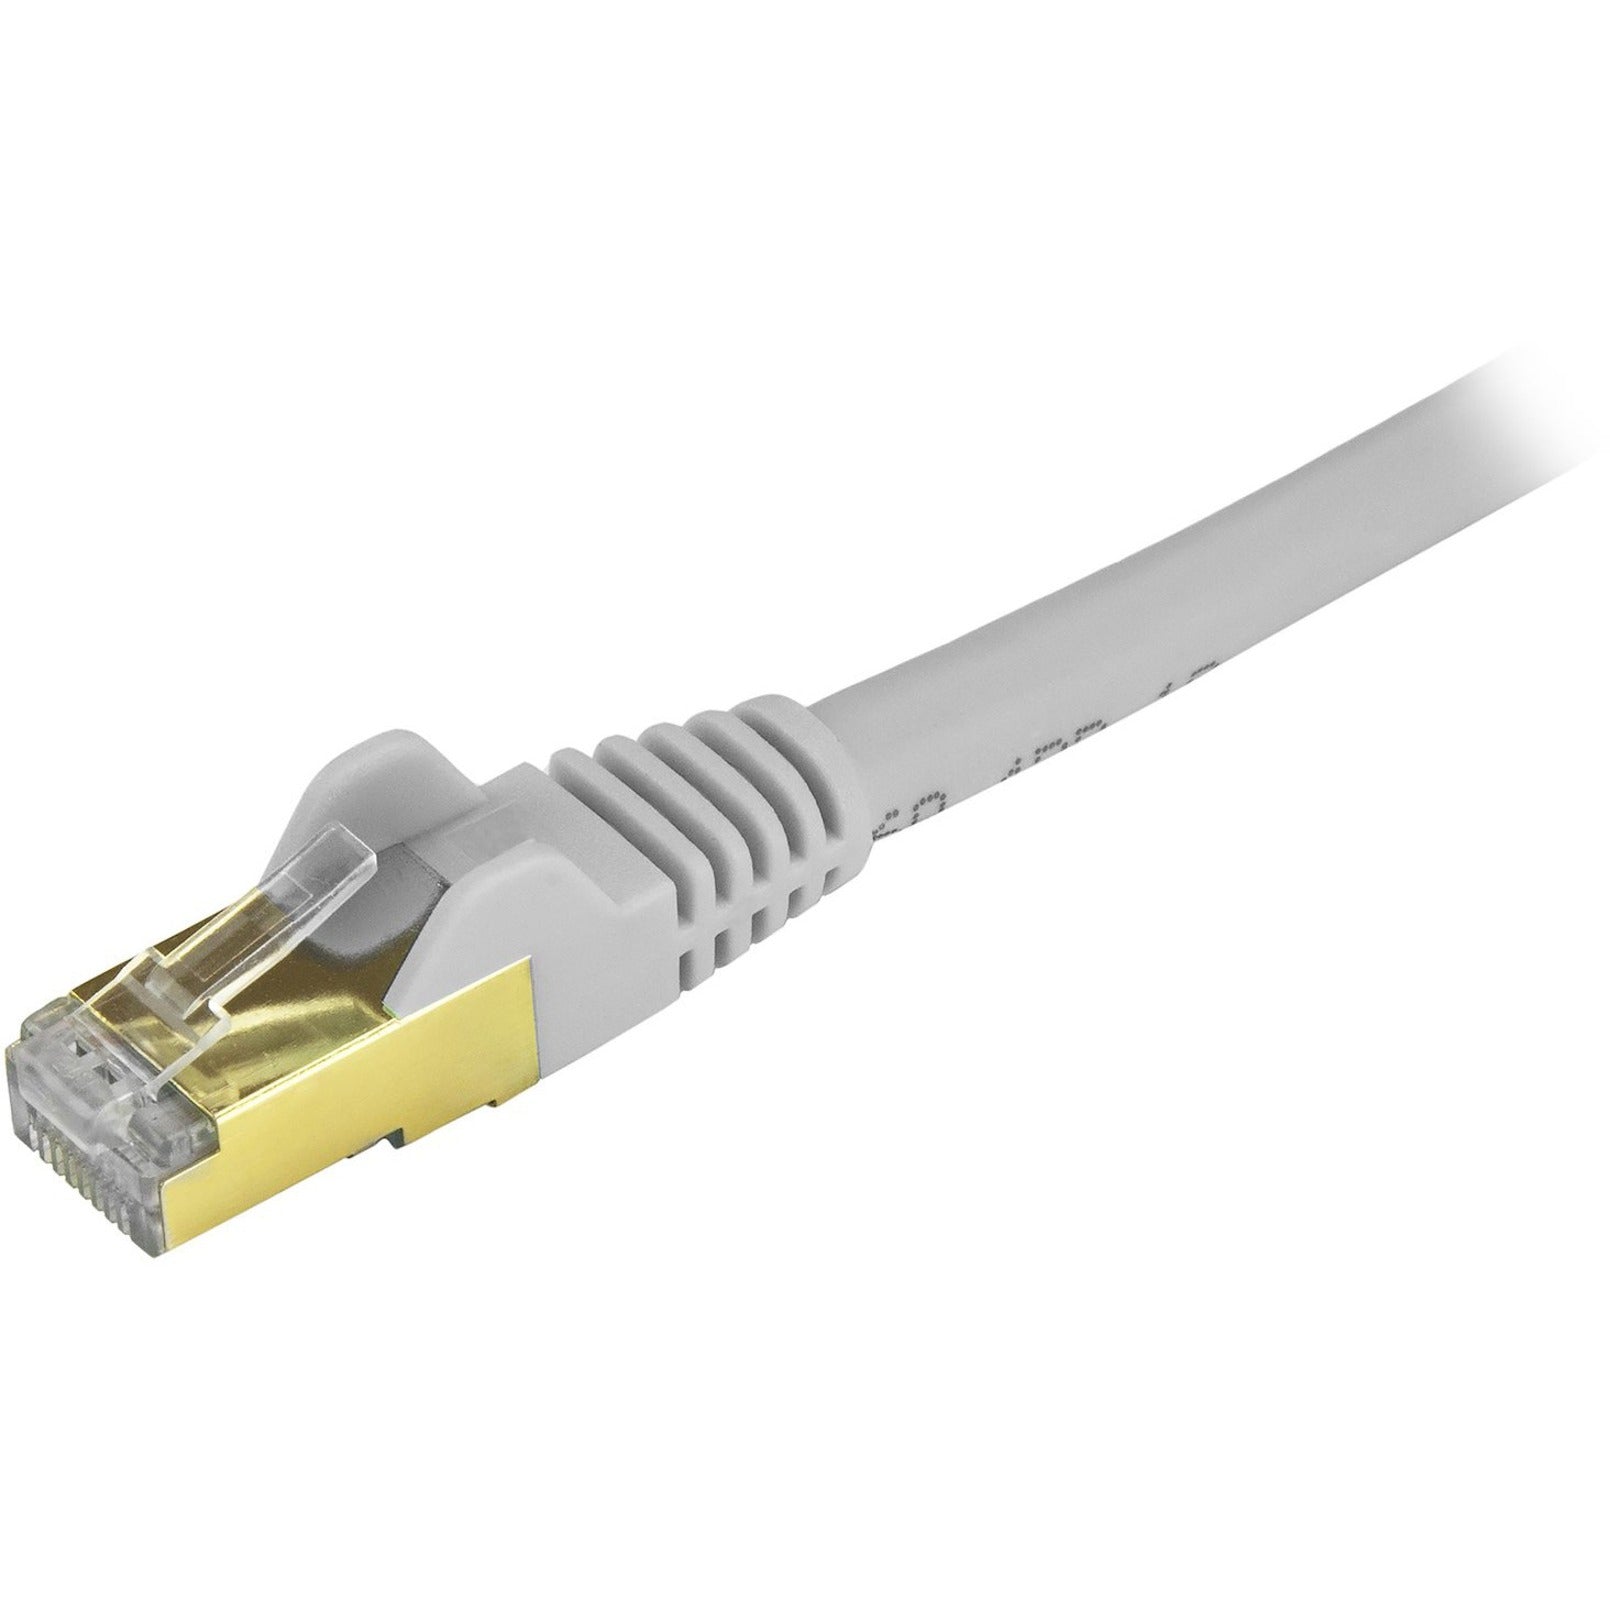 StarTech.com -> スターテック C6ASPAT6INGR -> C6ASPAT6INGR Cat6a Ethernet Patch Cable -> Cat6a イーサネット パッチ ケーブル Shielded (STP) -> シールド（STP） 6 in. -> 6 インチ Gray -> グレー Short Ethernet Cord -> 短いイーサネットコード